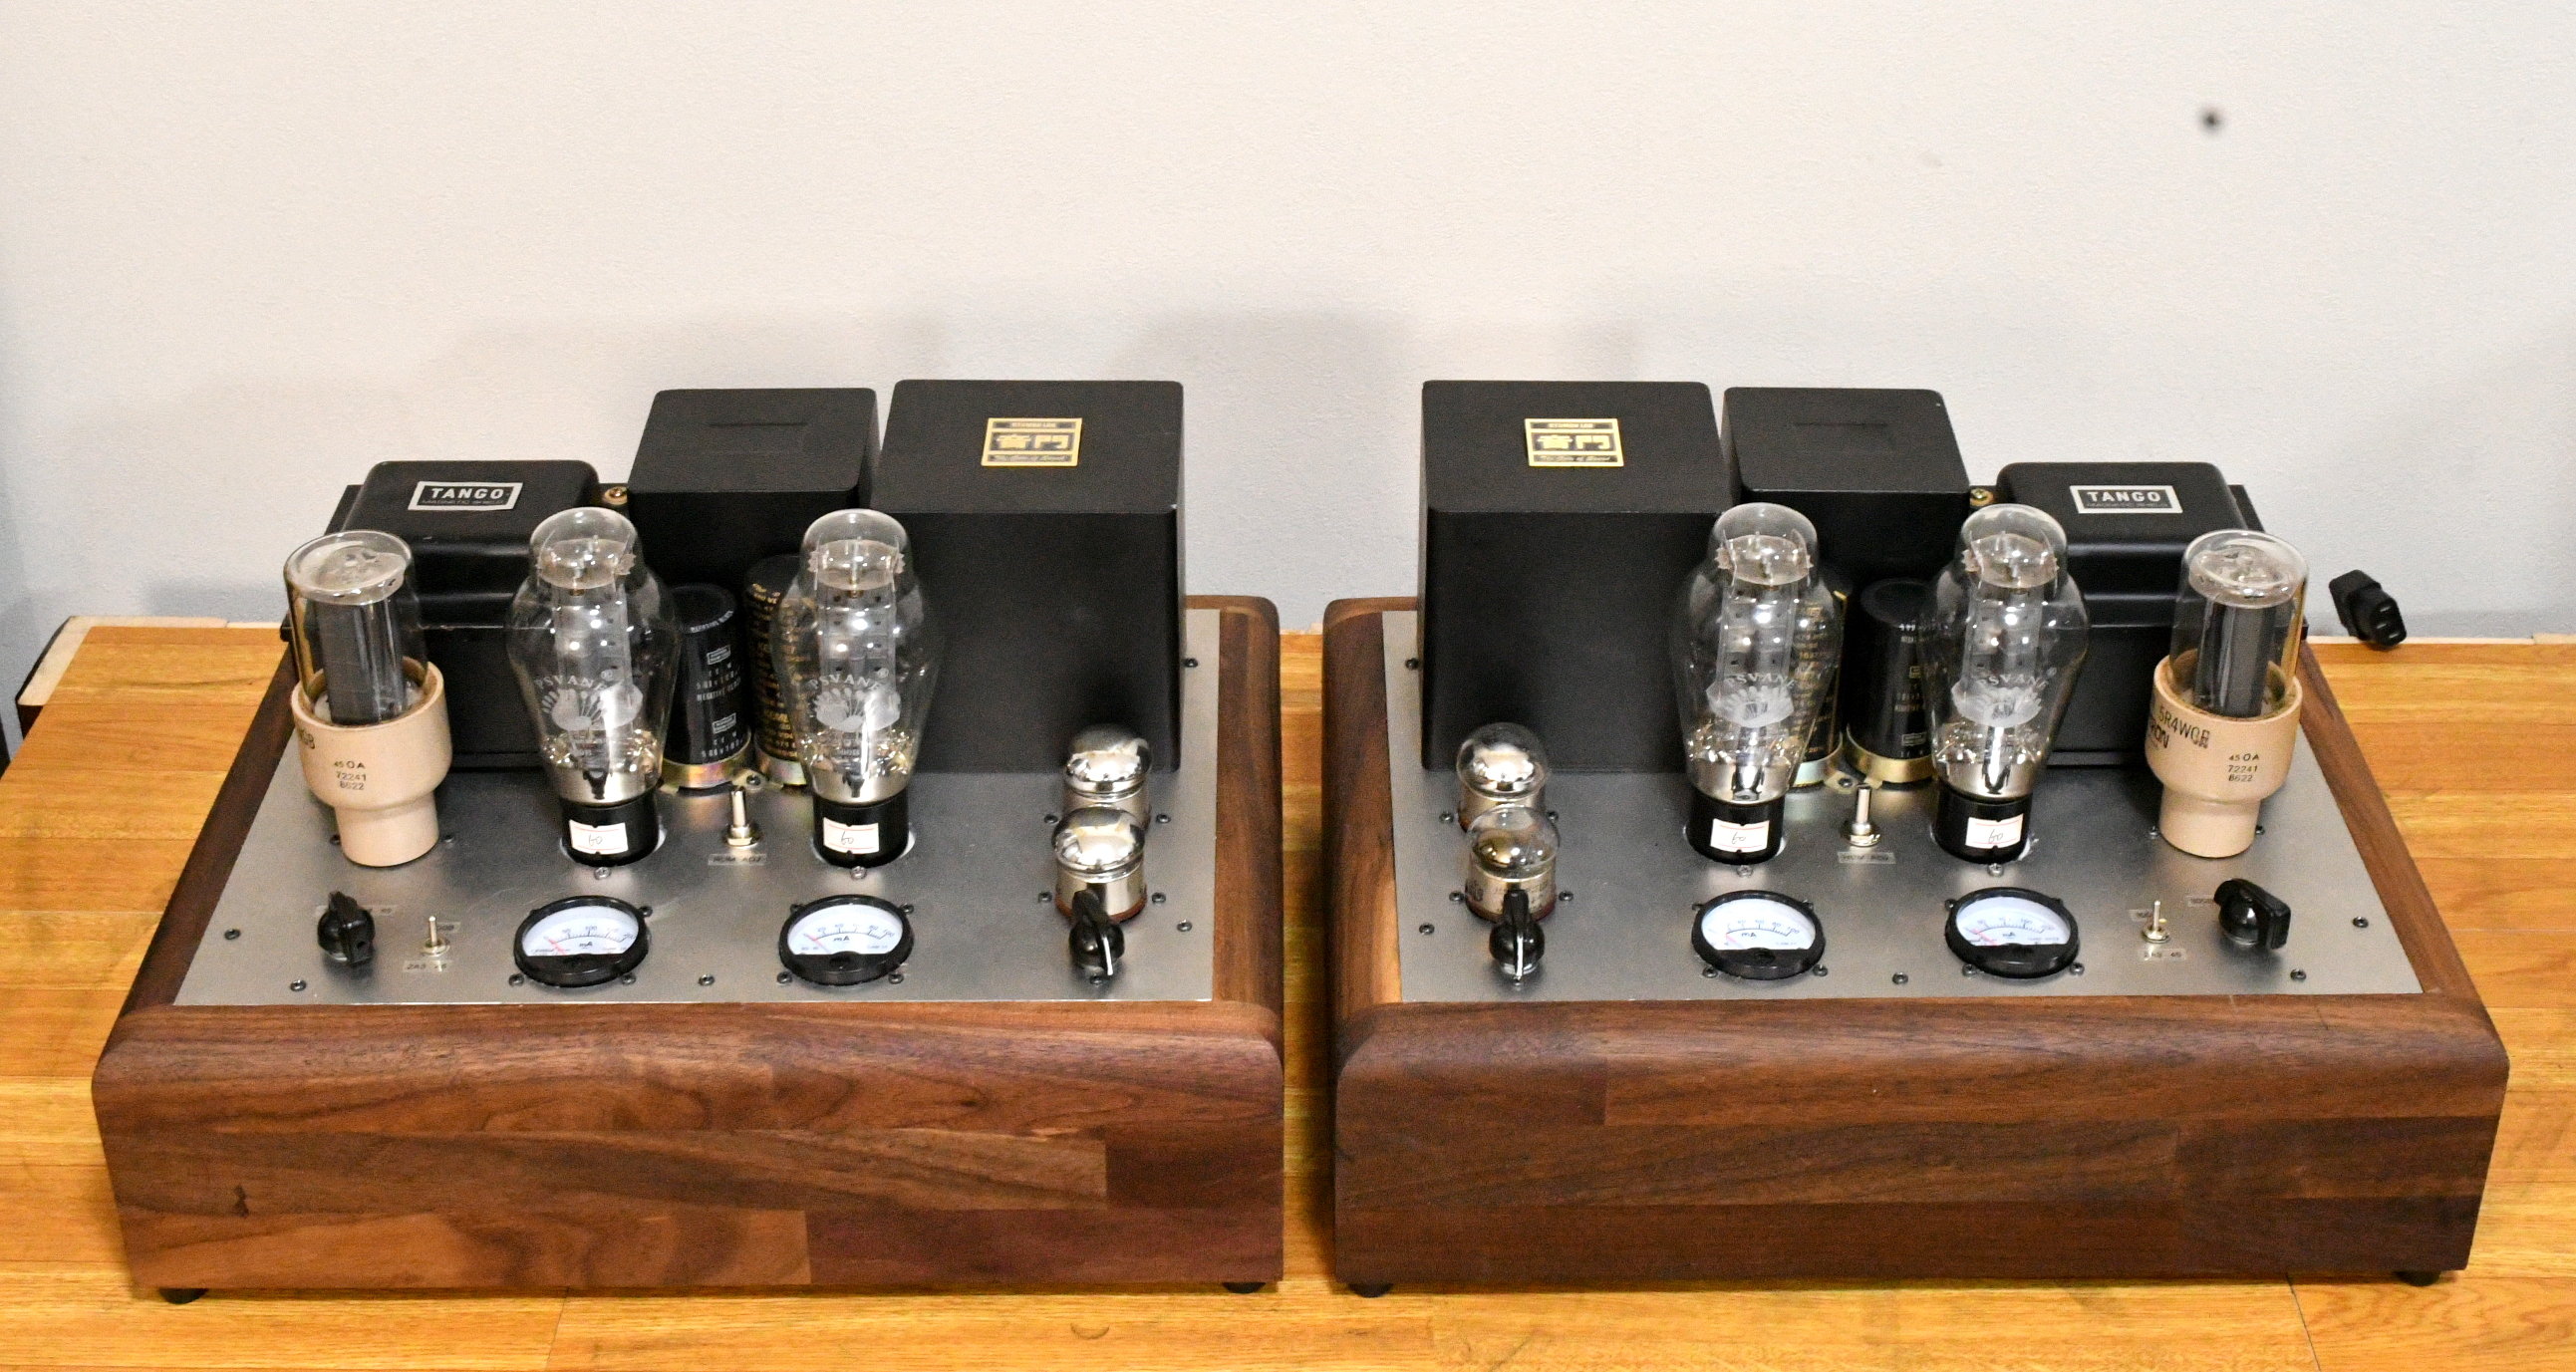 [Prototype] OTOMON LAB 45/2A3/300B compatible PP tube amplifier 15Wx2 monoblocks